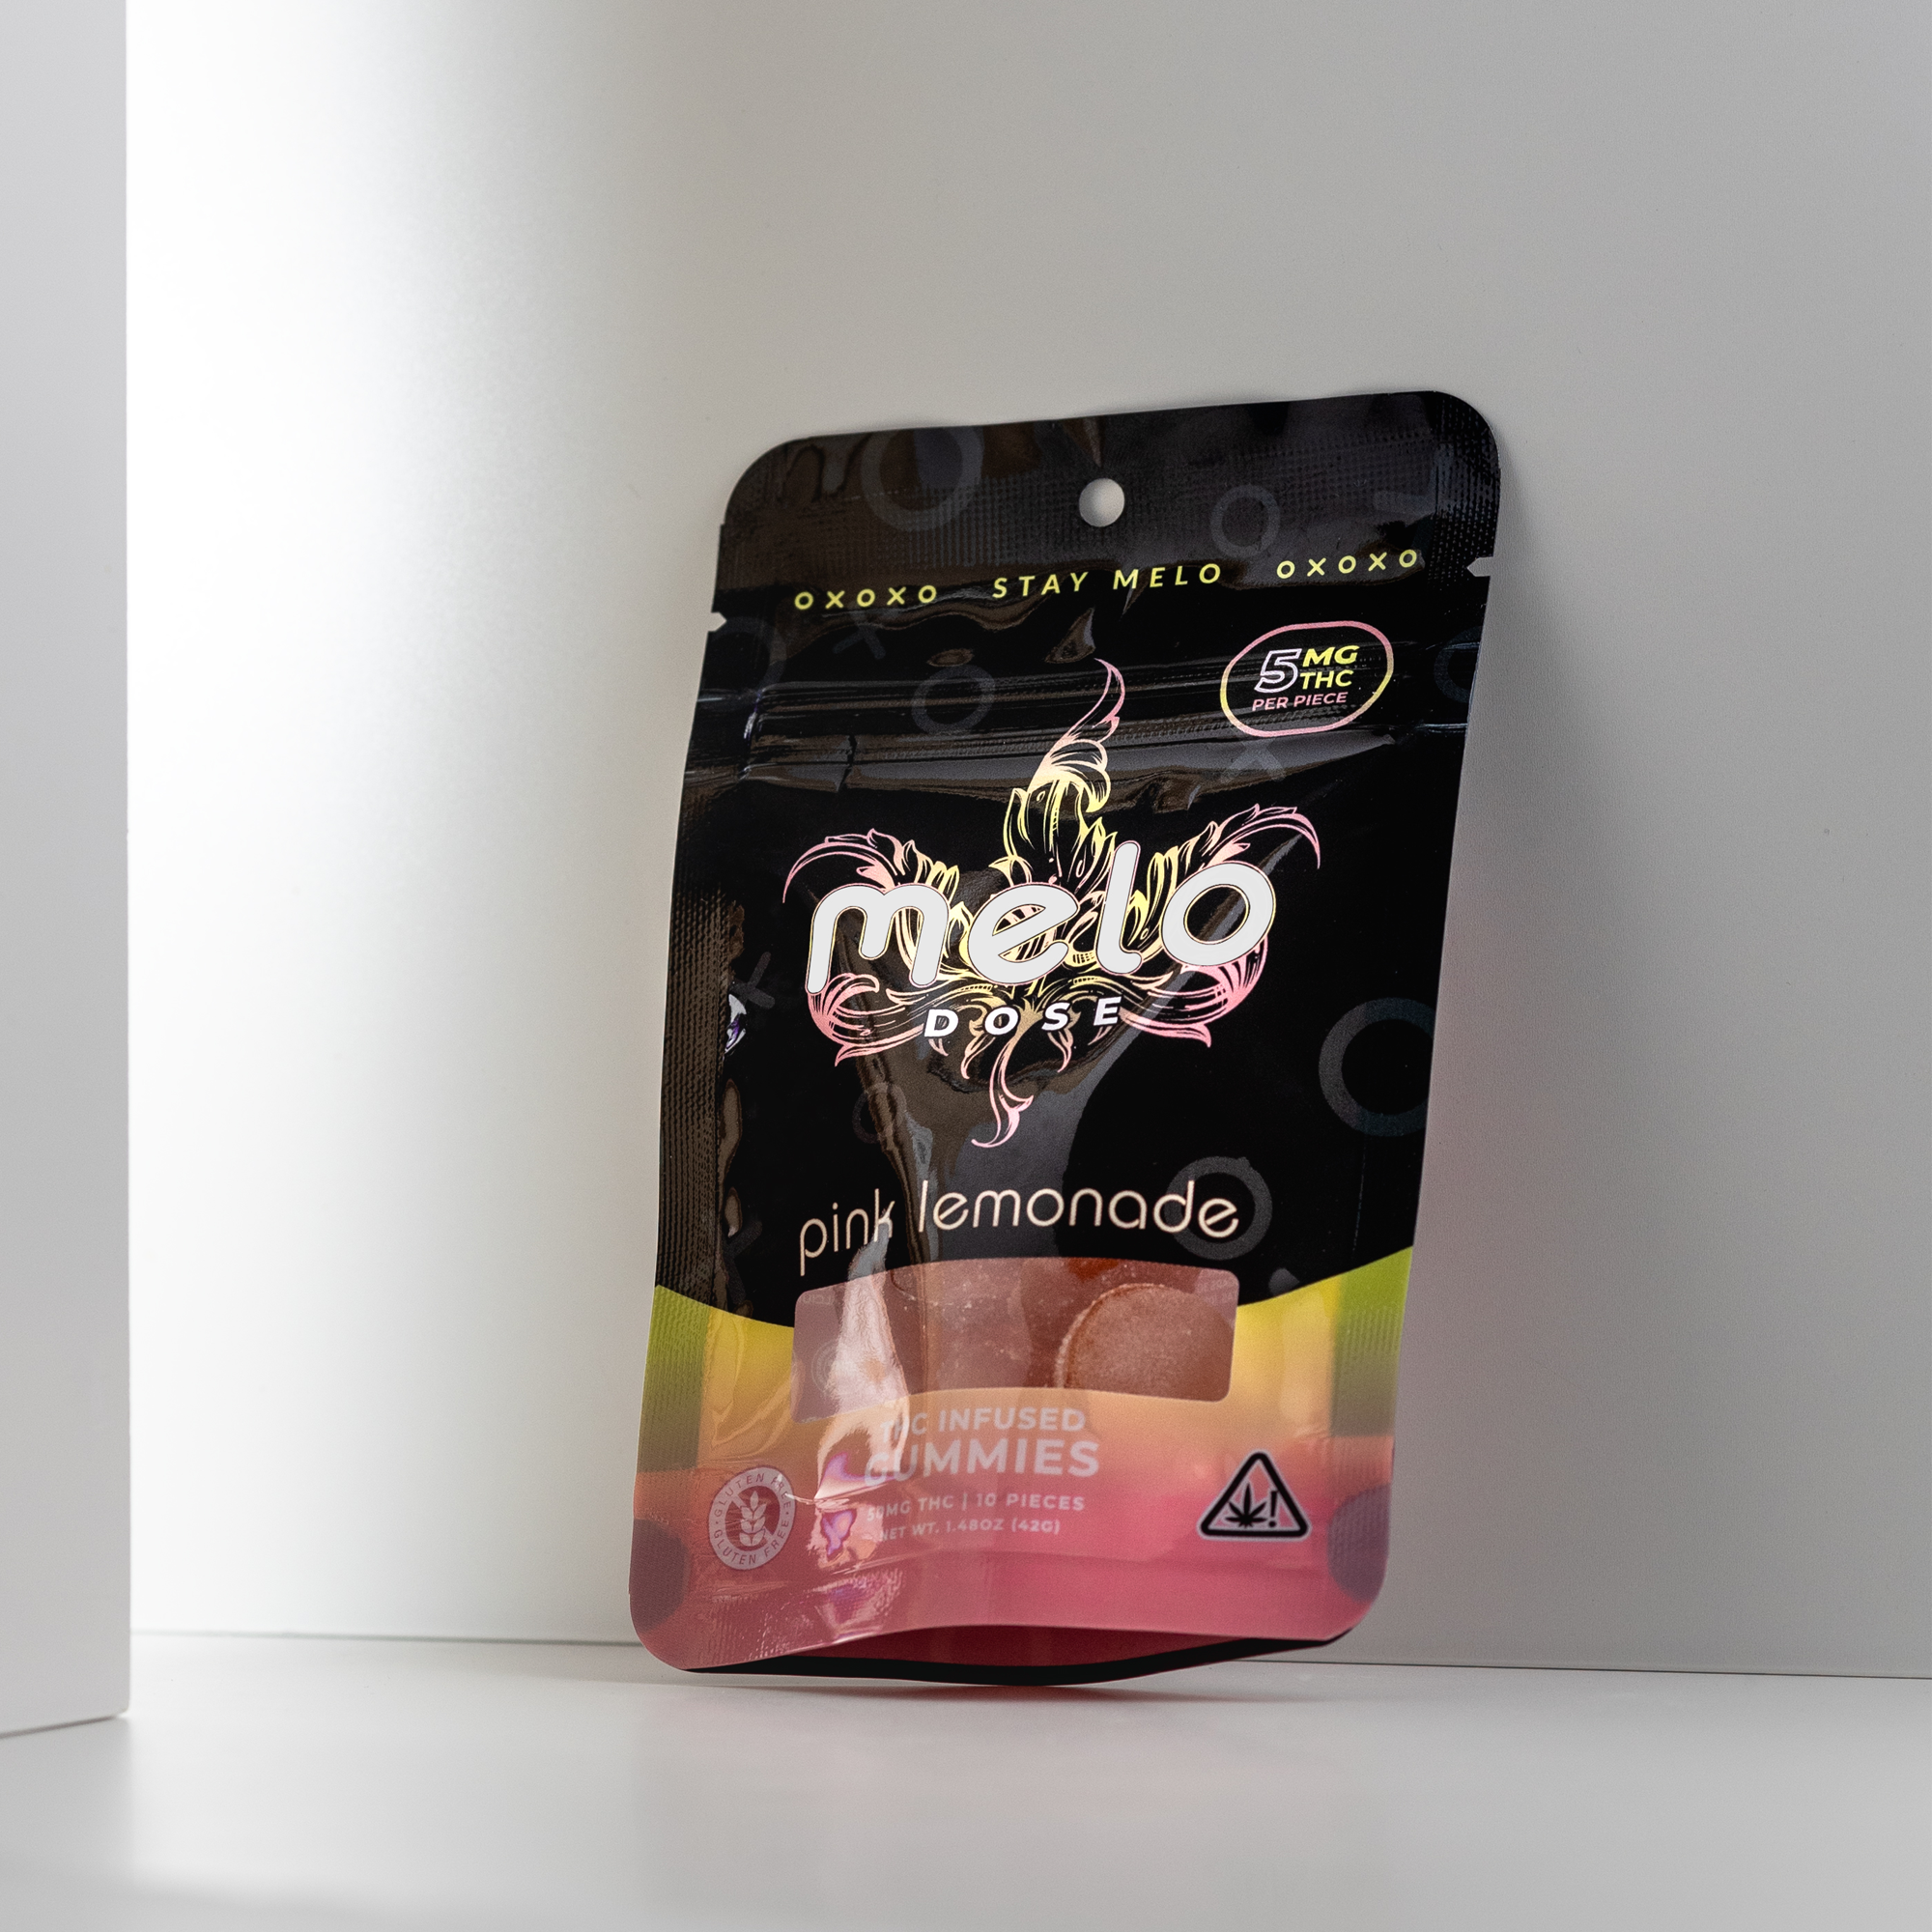 Melo Dose – Pink Lemonade 50MG Delta-9 THC Gummies Best Price